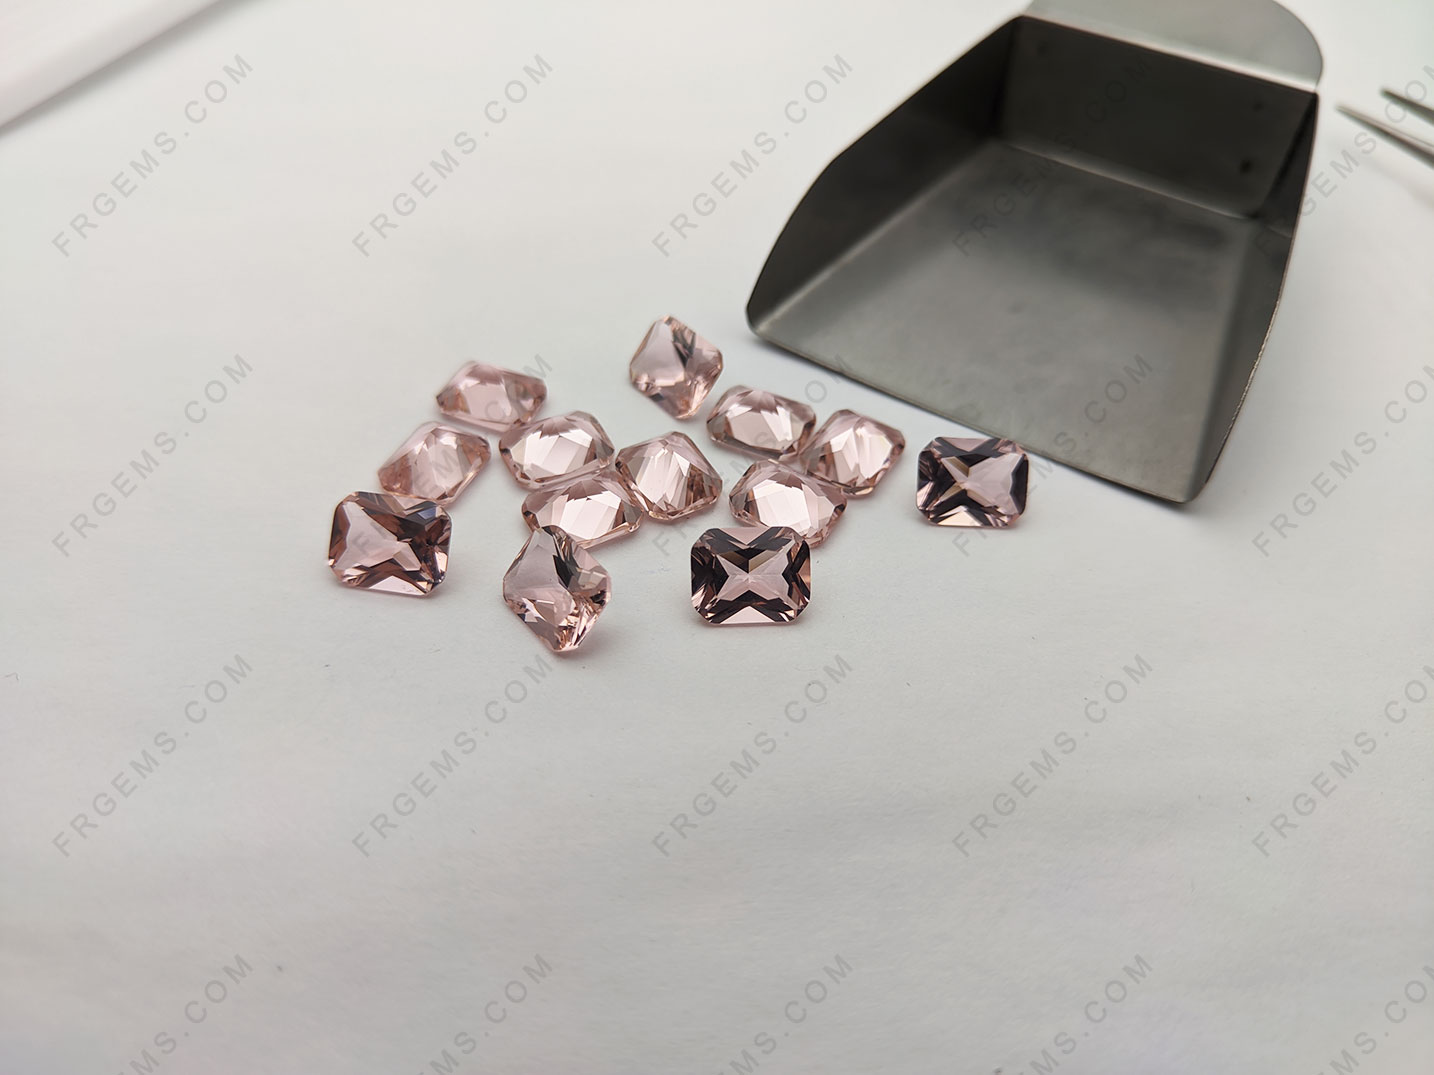 Loose Nano Crystal morganite Pink peach color Octagon Shape Radiant 10x8mm faceted cut gemstones